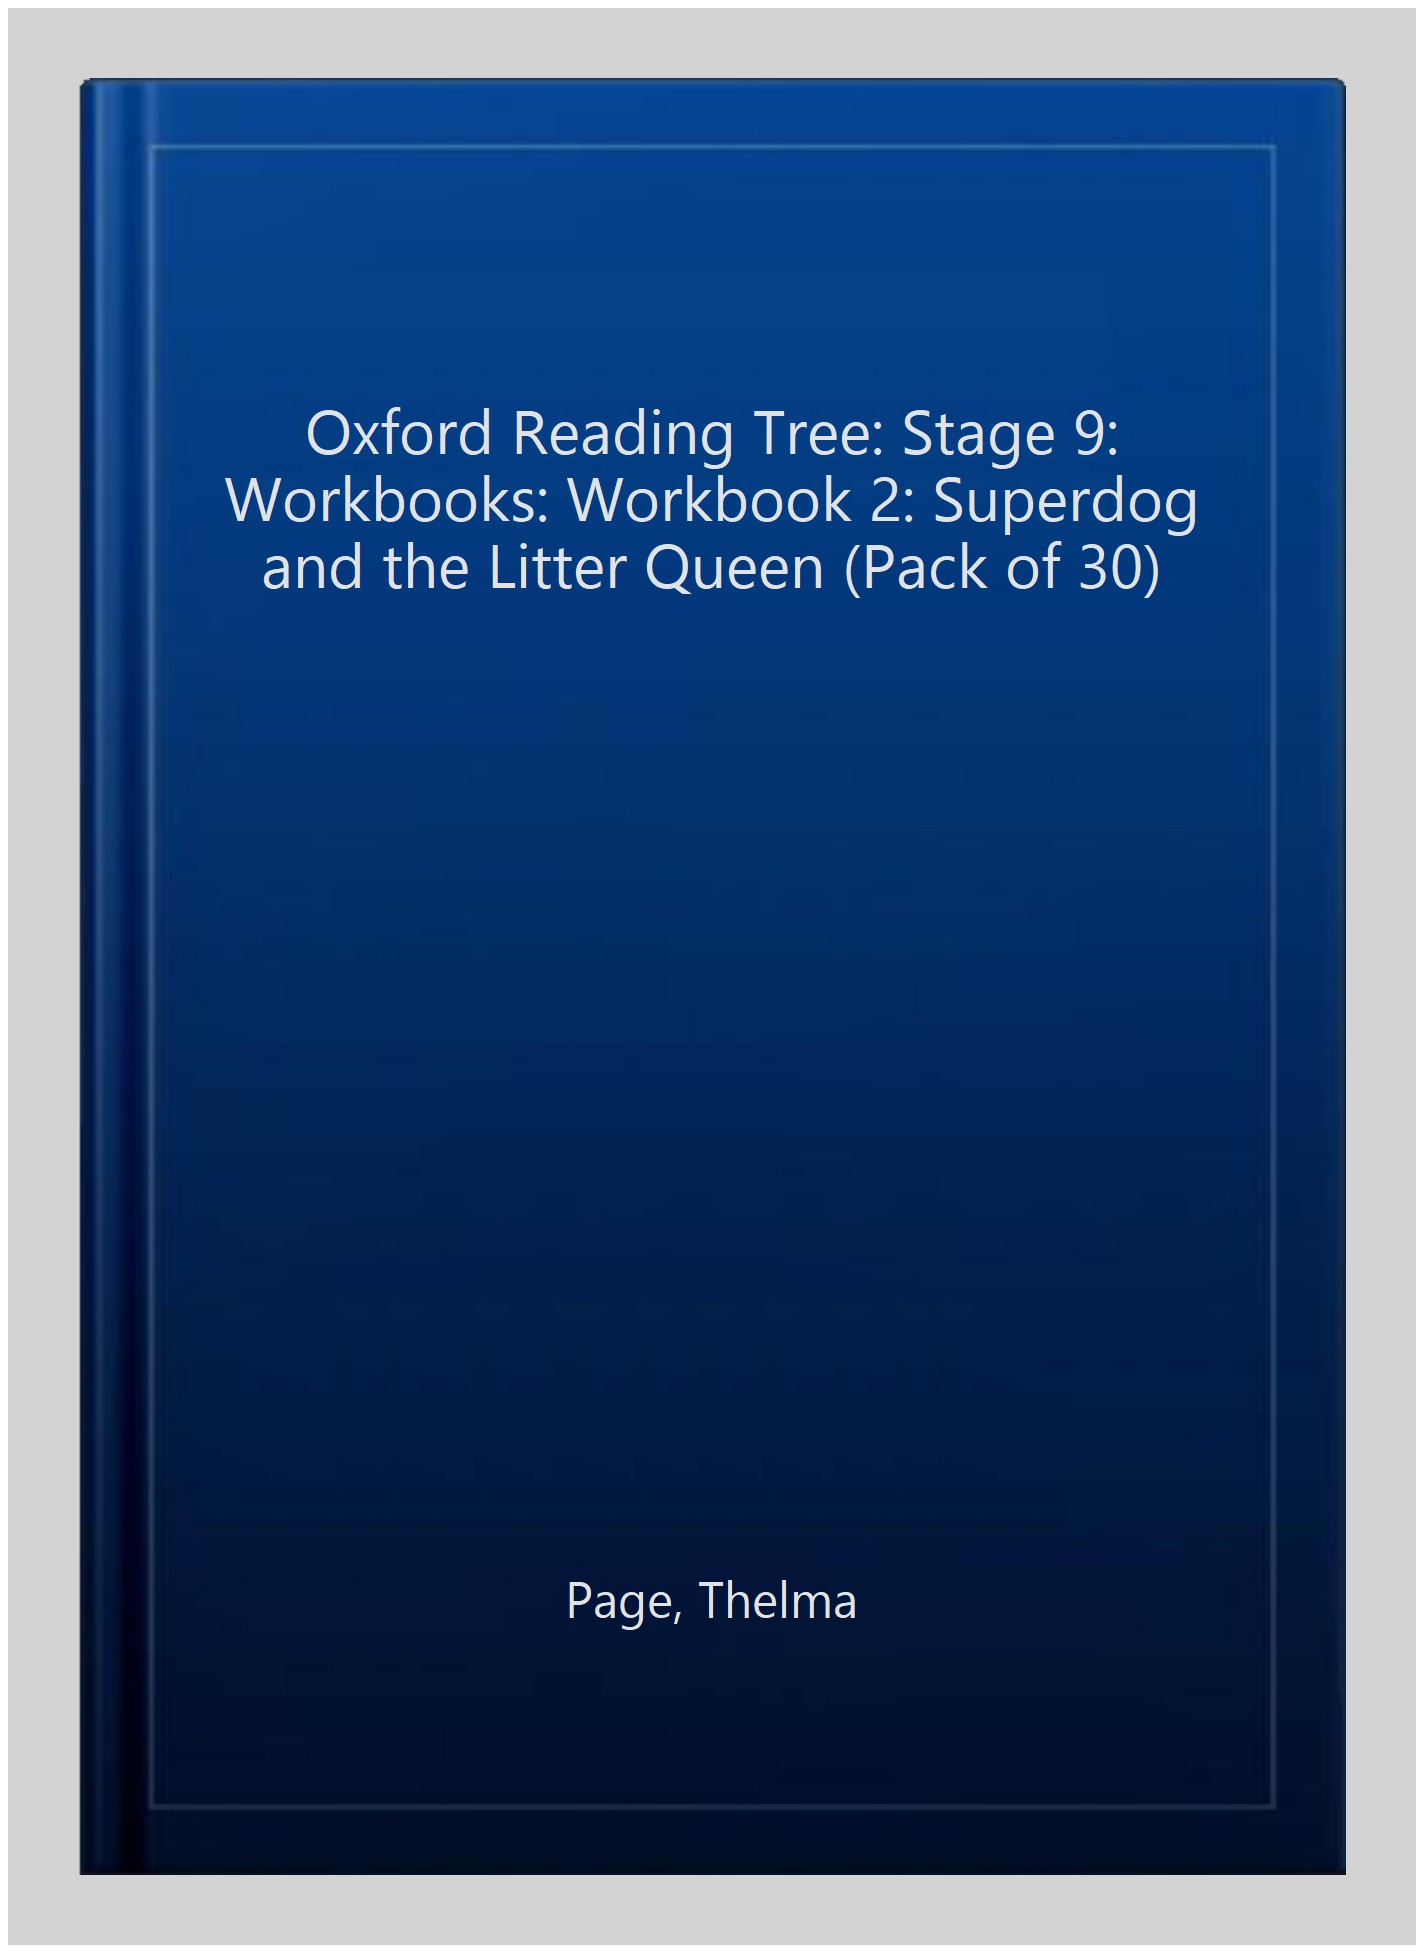 Oxford Reading Tree: Stage 9: Workbooks: 